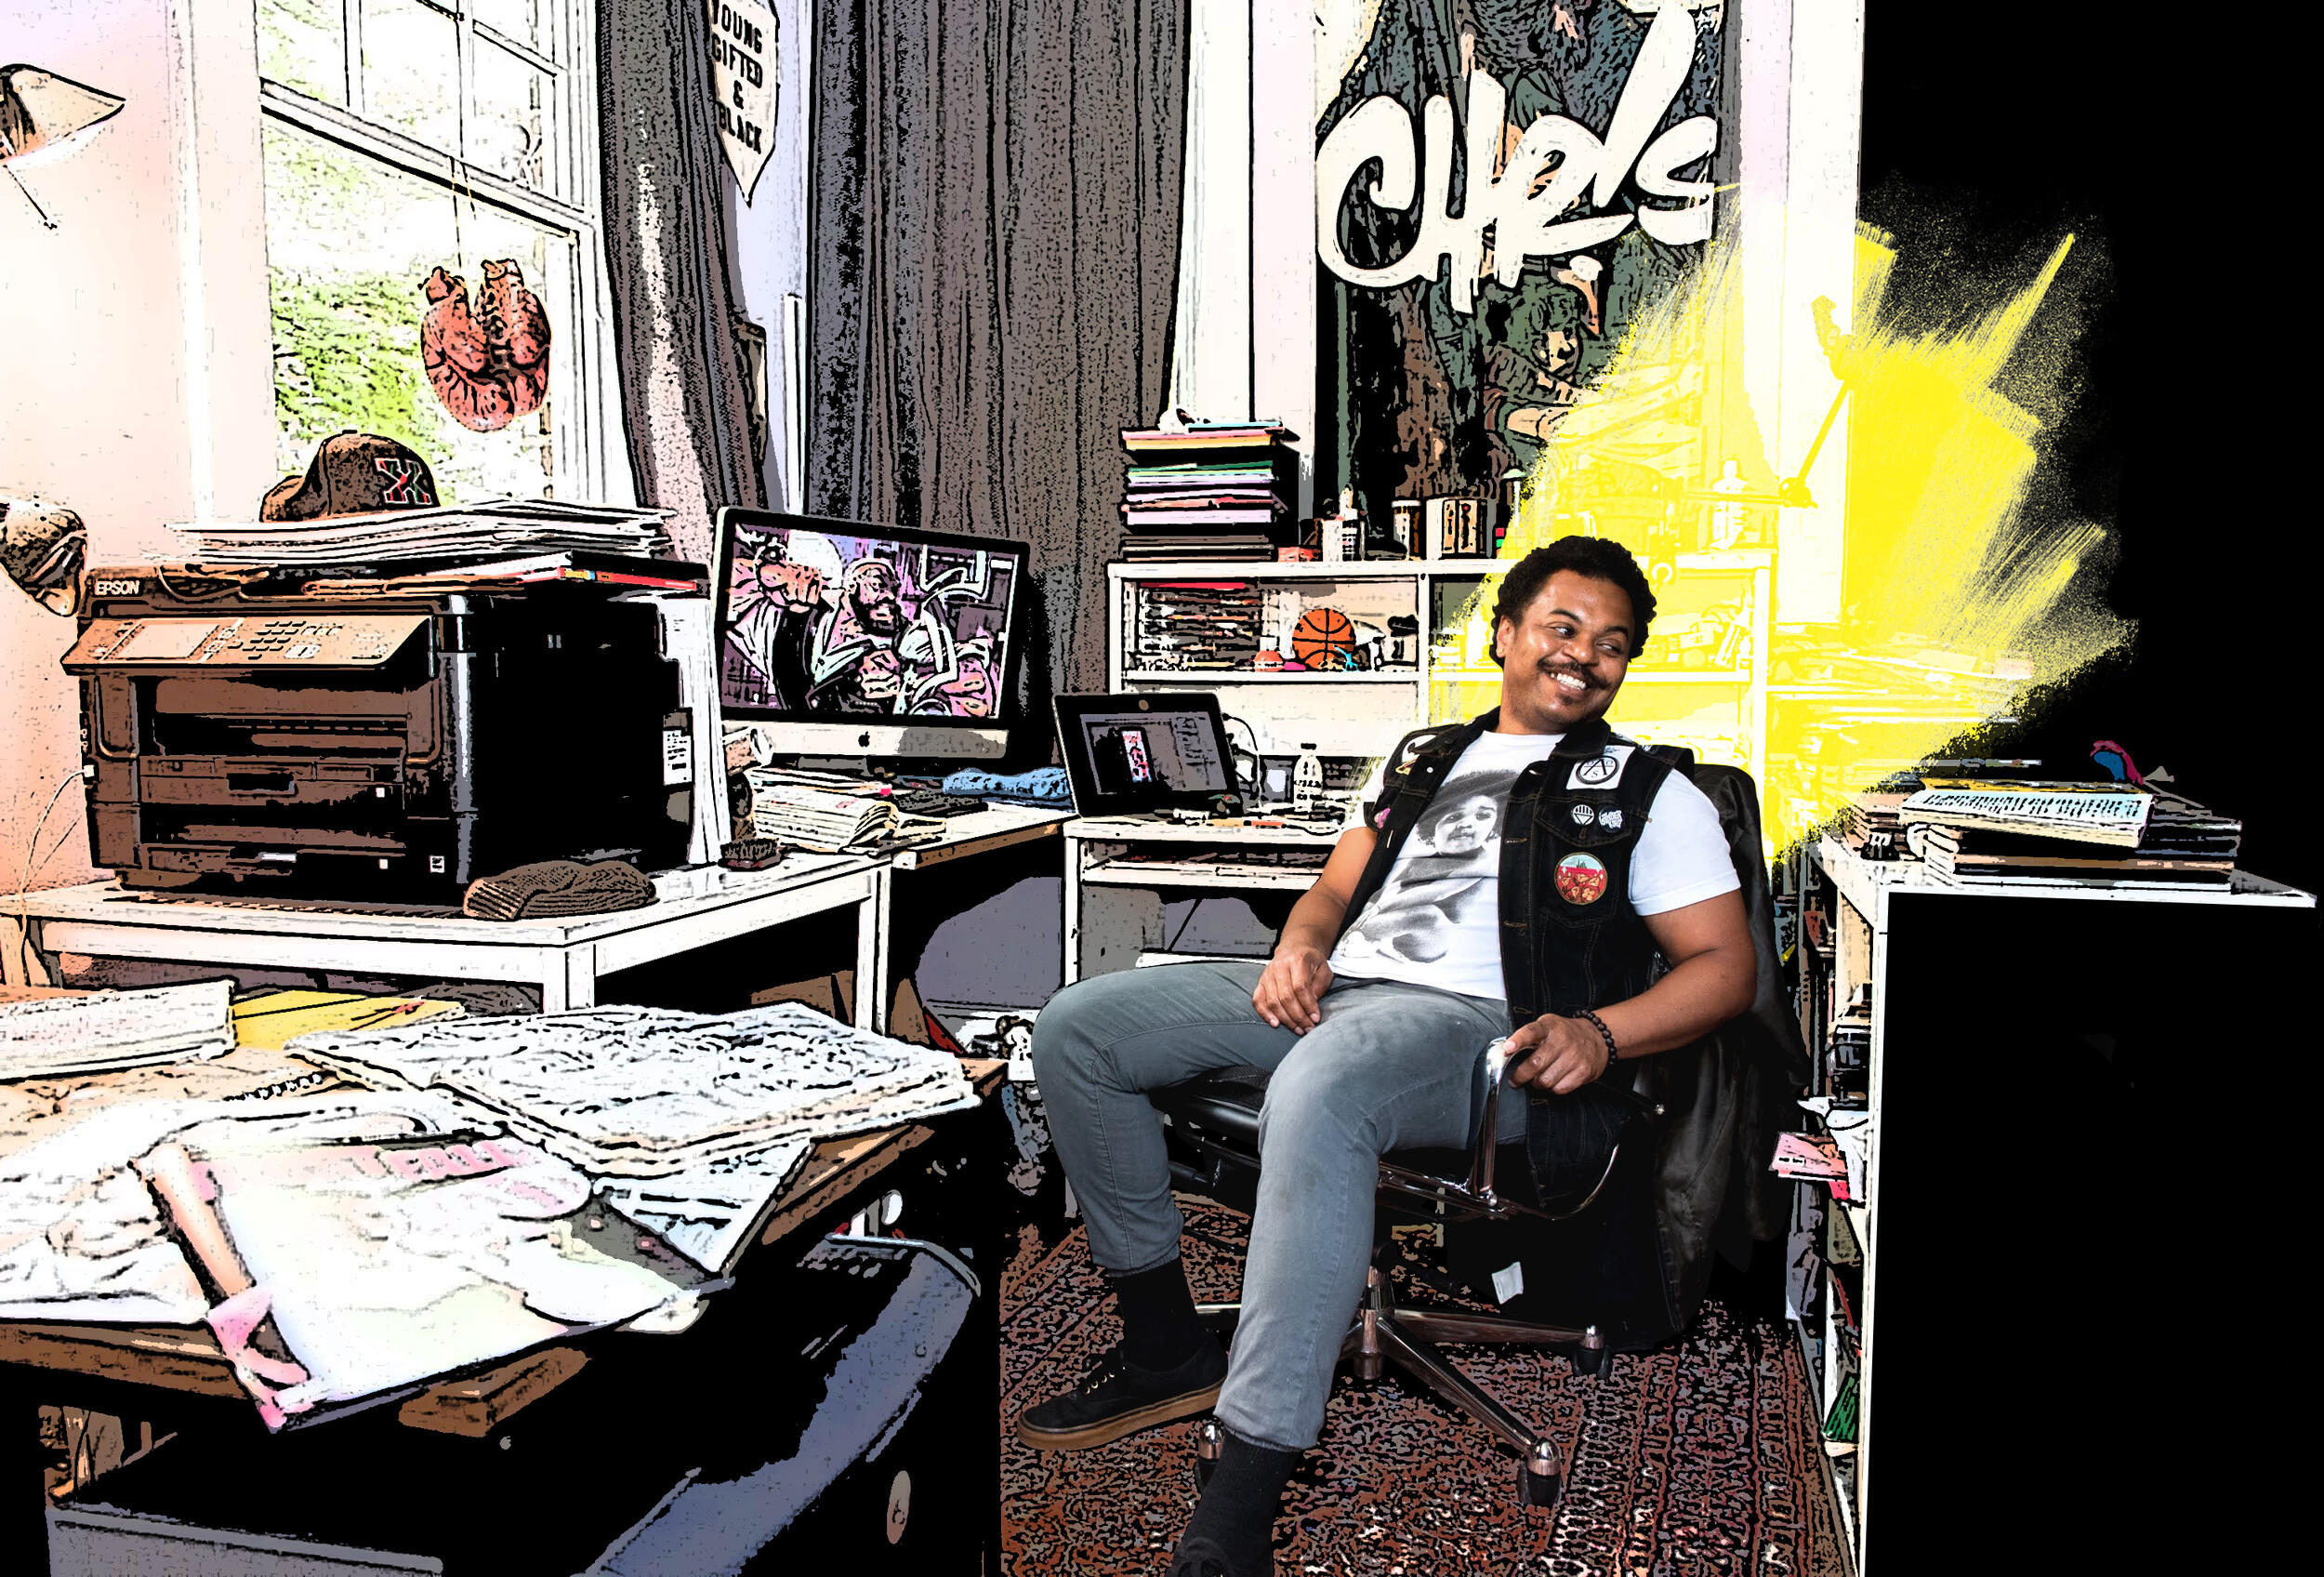 Chris Visions sitting in his art studio.